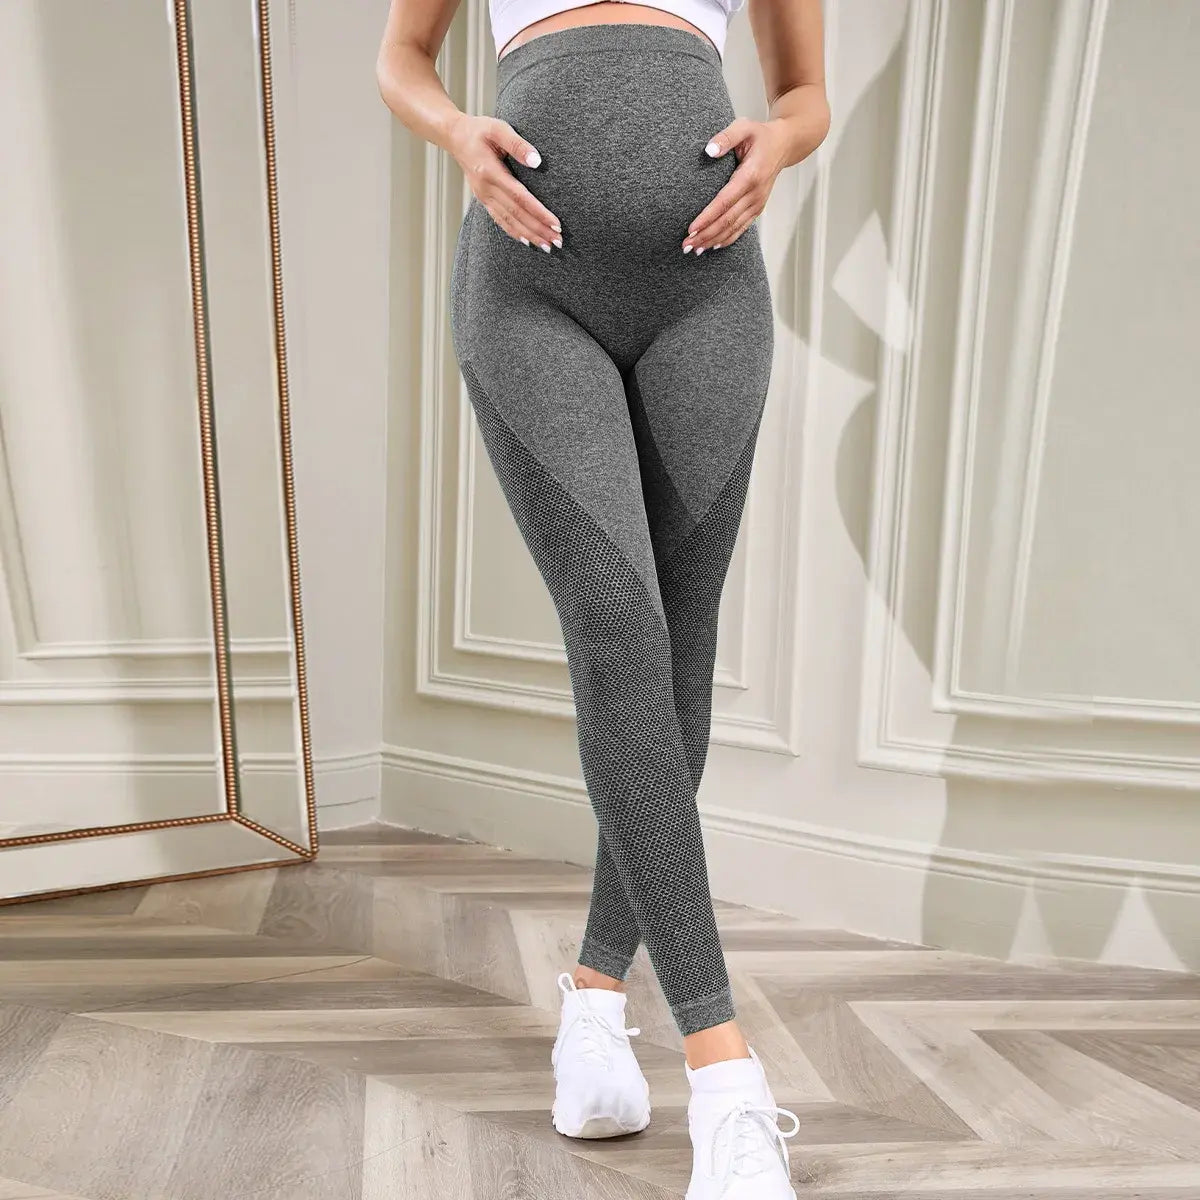 Pregnant Women's Yoga Pants